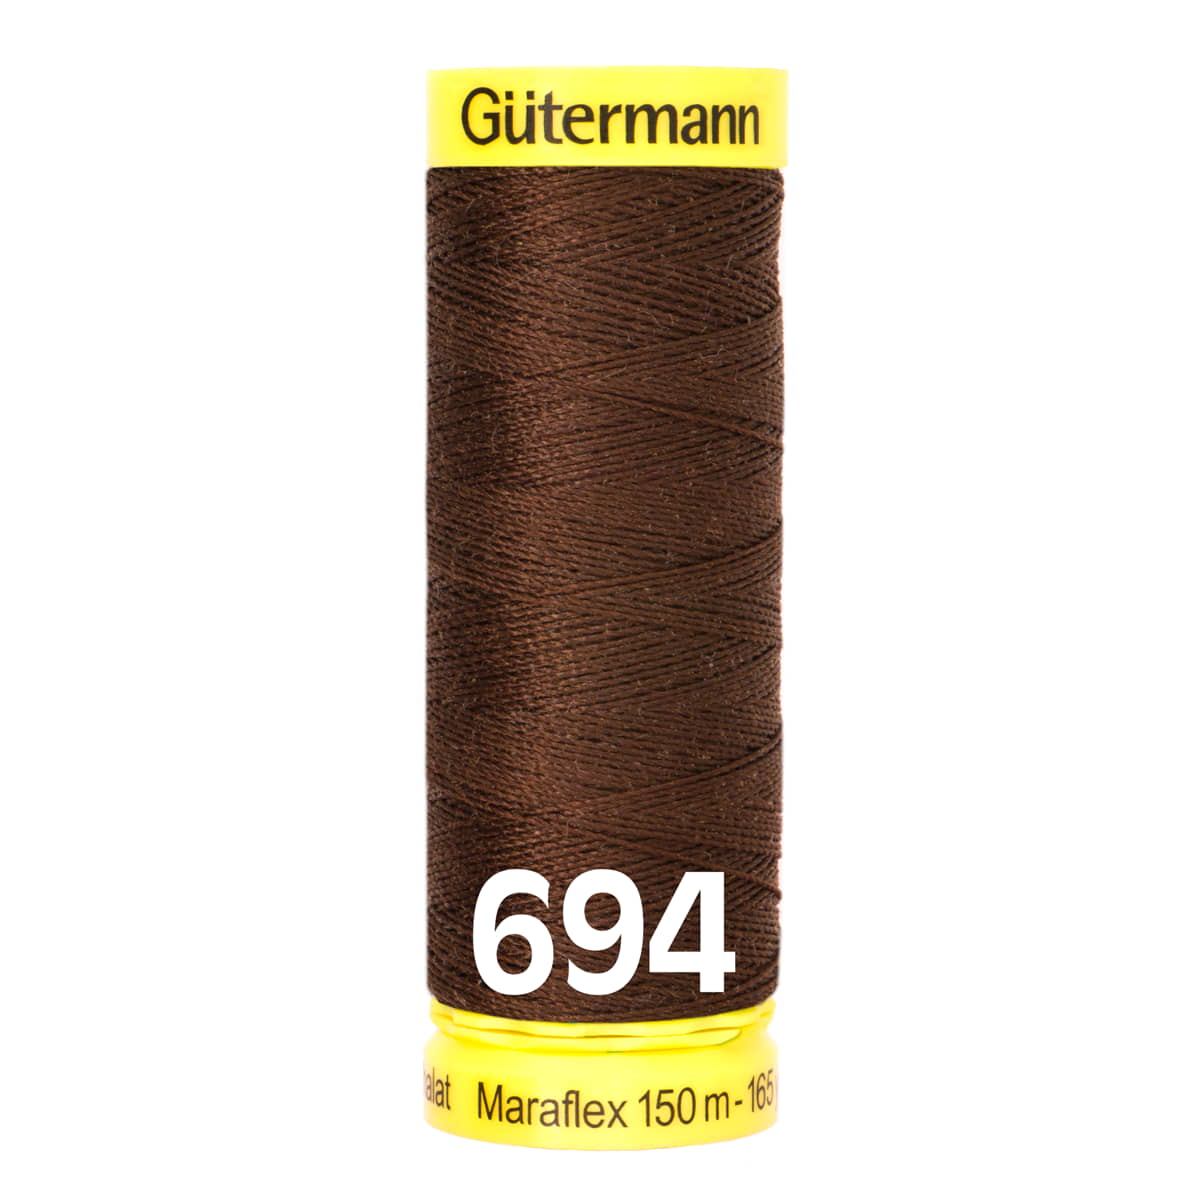 Gütermann MaraFlex 150m - 694 donker bruin GUTERMANN-MARAFLEX-150-694 4029394998485 - Fourniturenkraam.nl